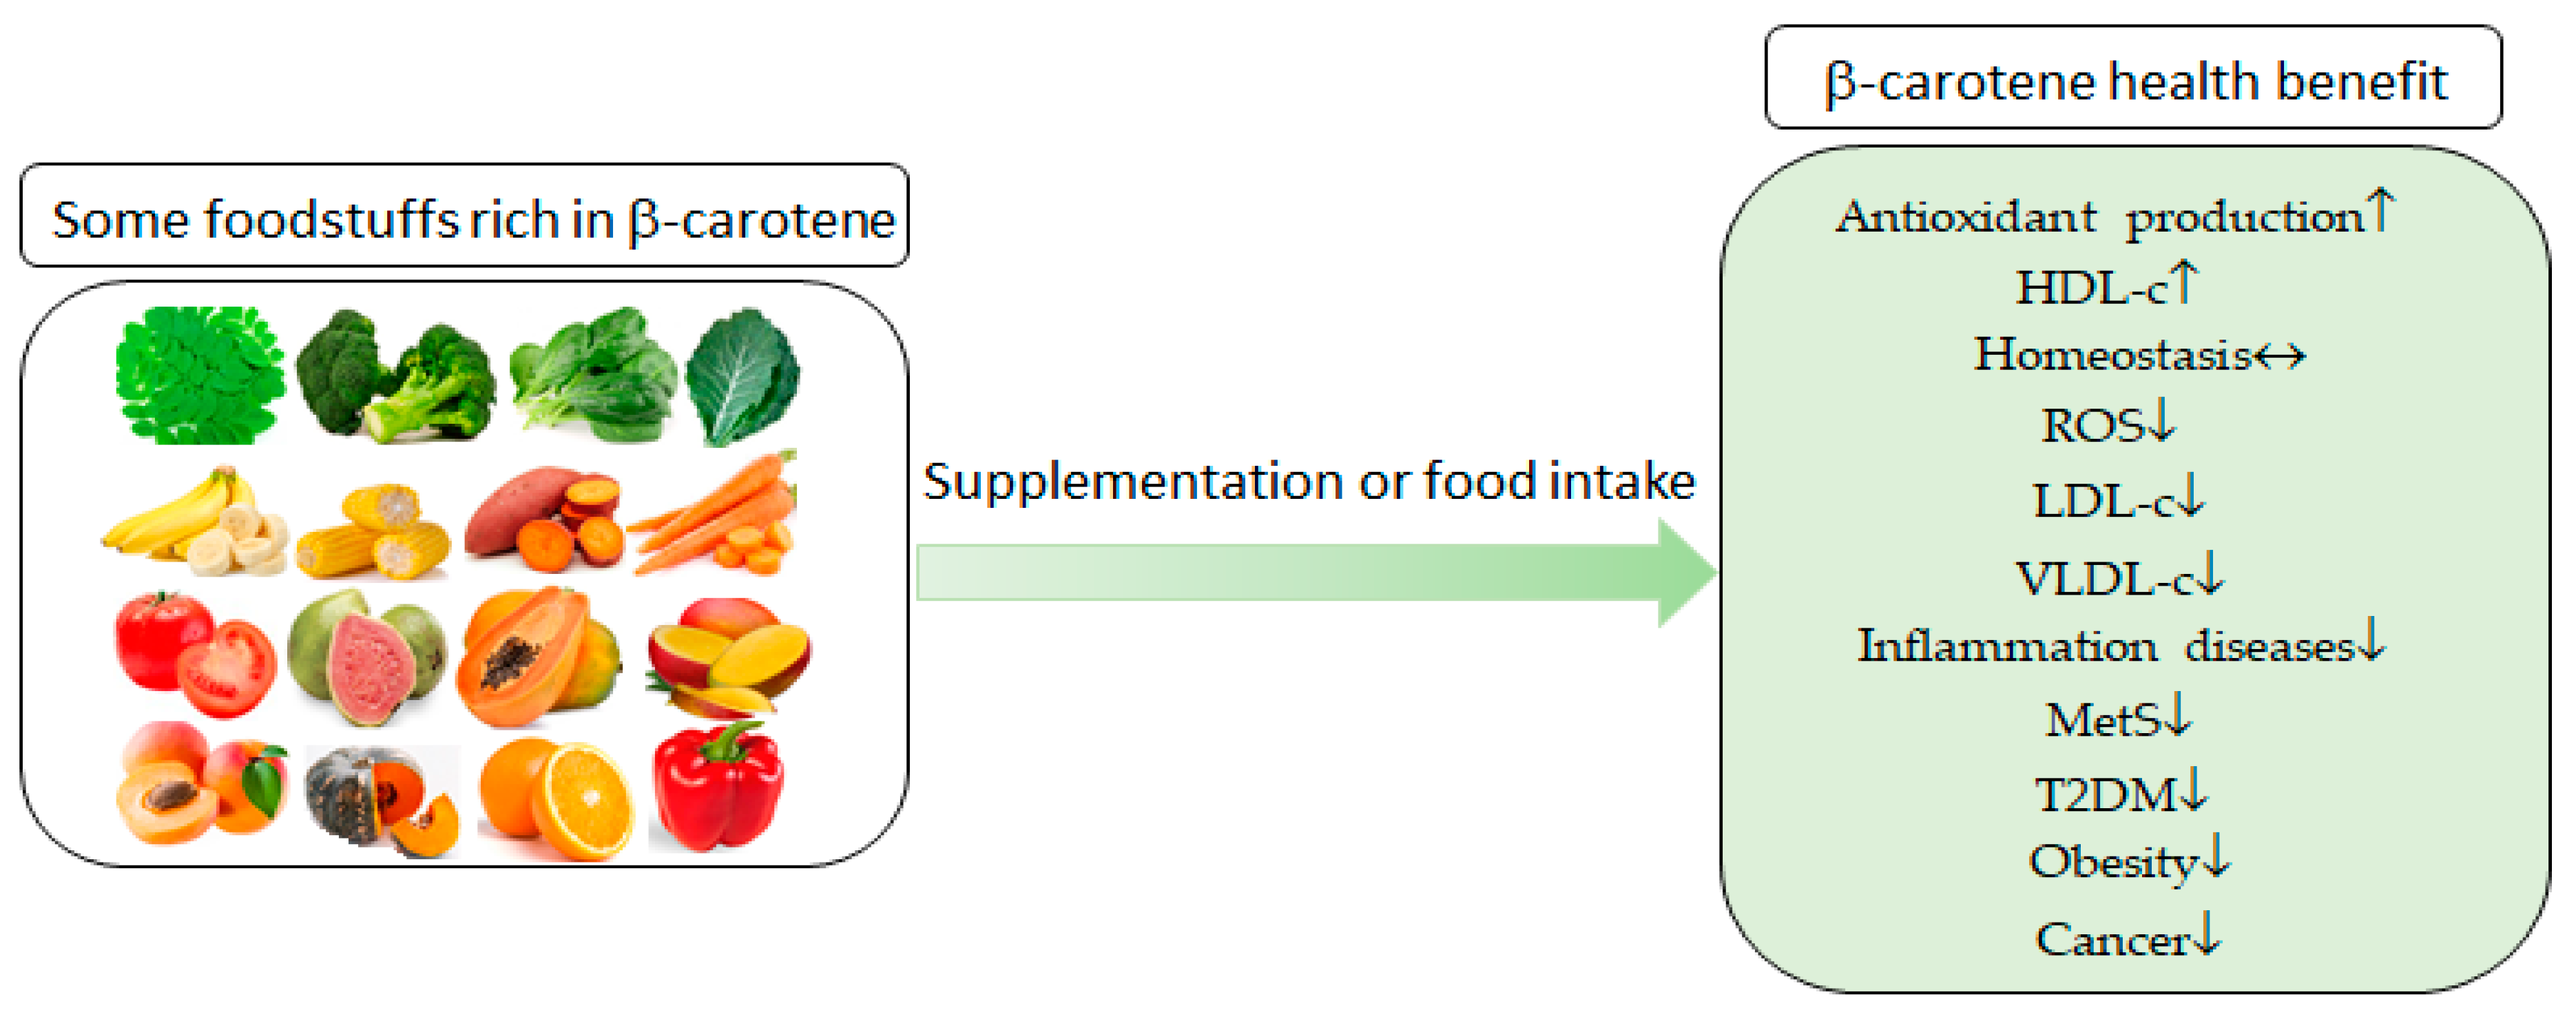 Beta-carotene and inflammation reduction